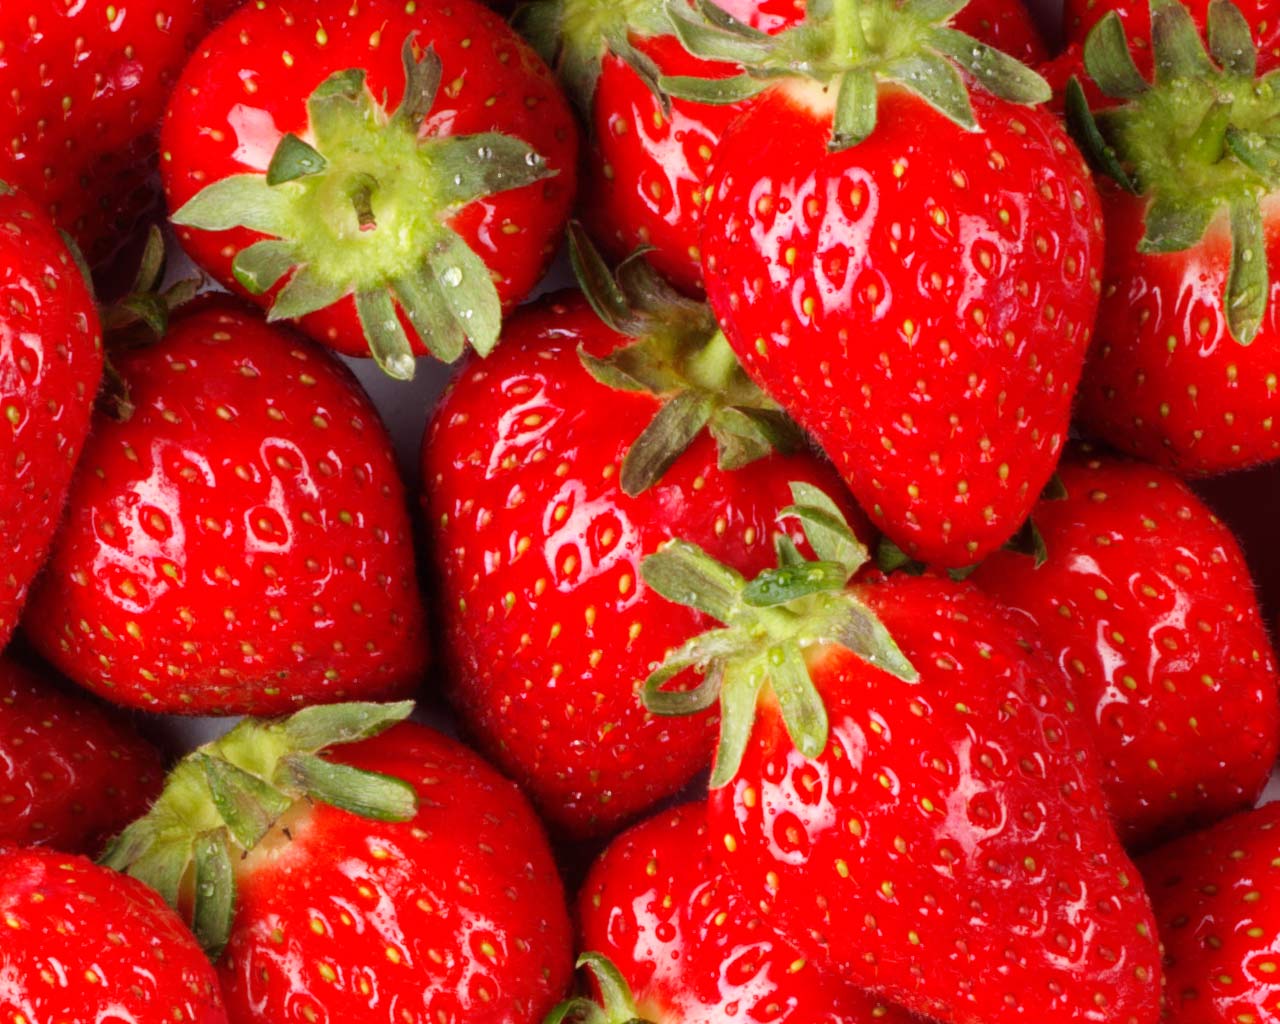 http://coastalnc.com/wp-content/uploads/2011/05/strawberries1.jpg